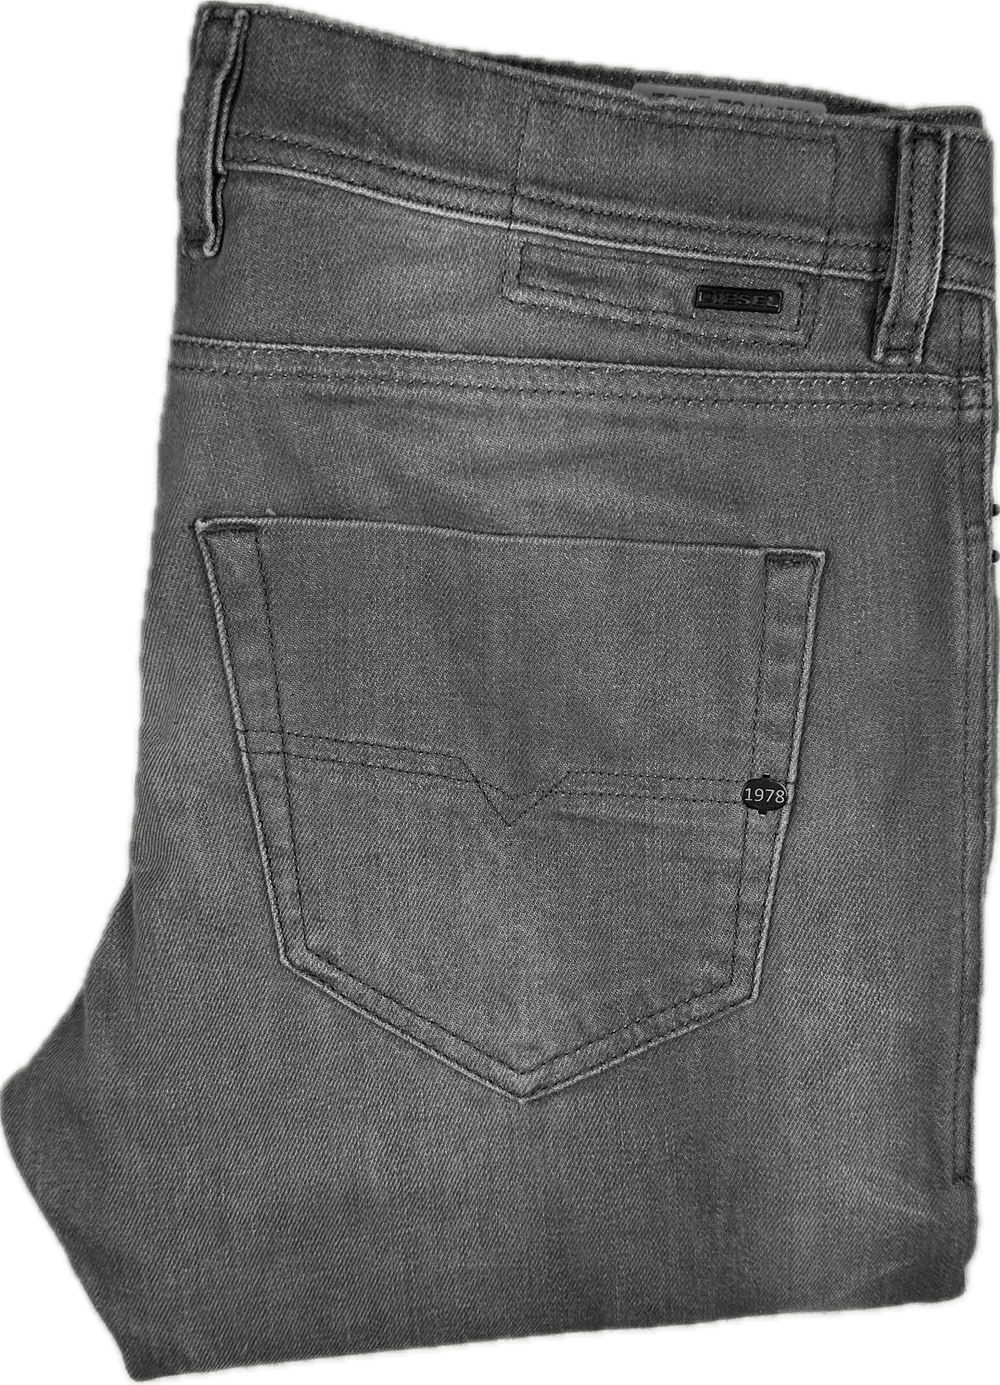 Diesel Mens 'Tepphar' Slim Carrot Grey Jeans - Size 32/32 - Jean Pool